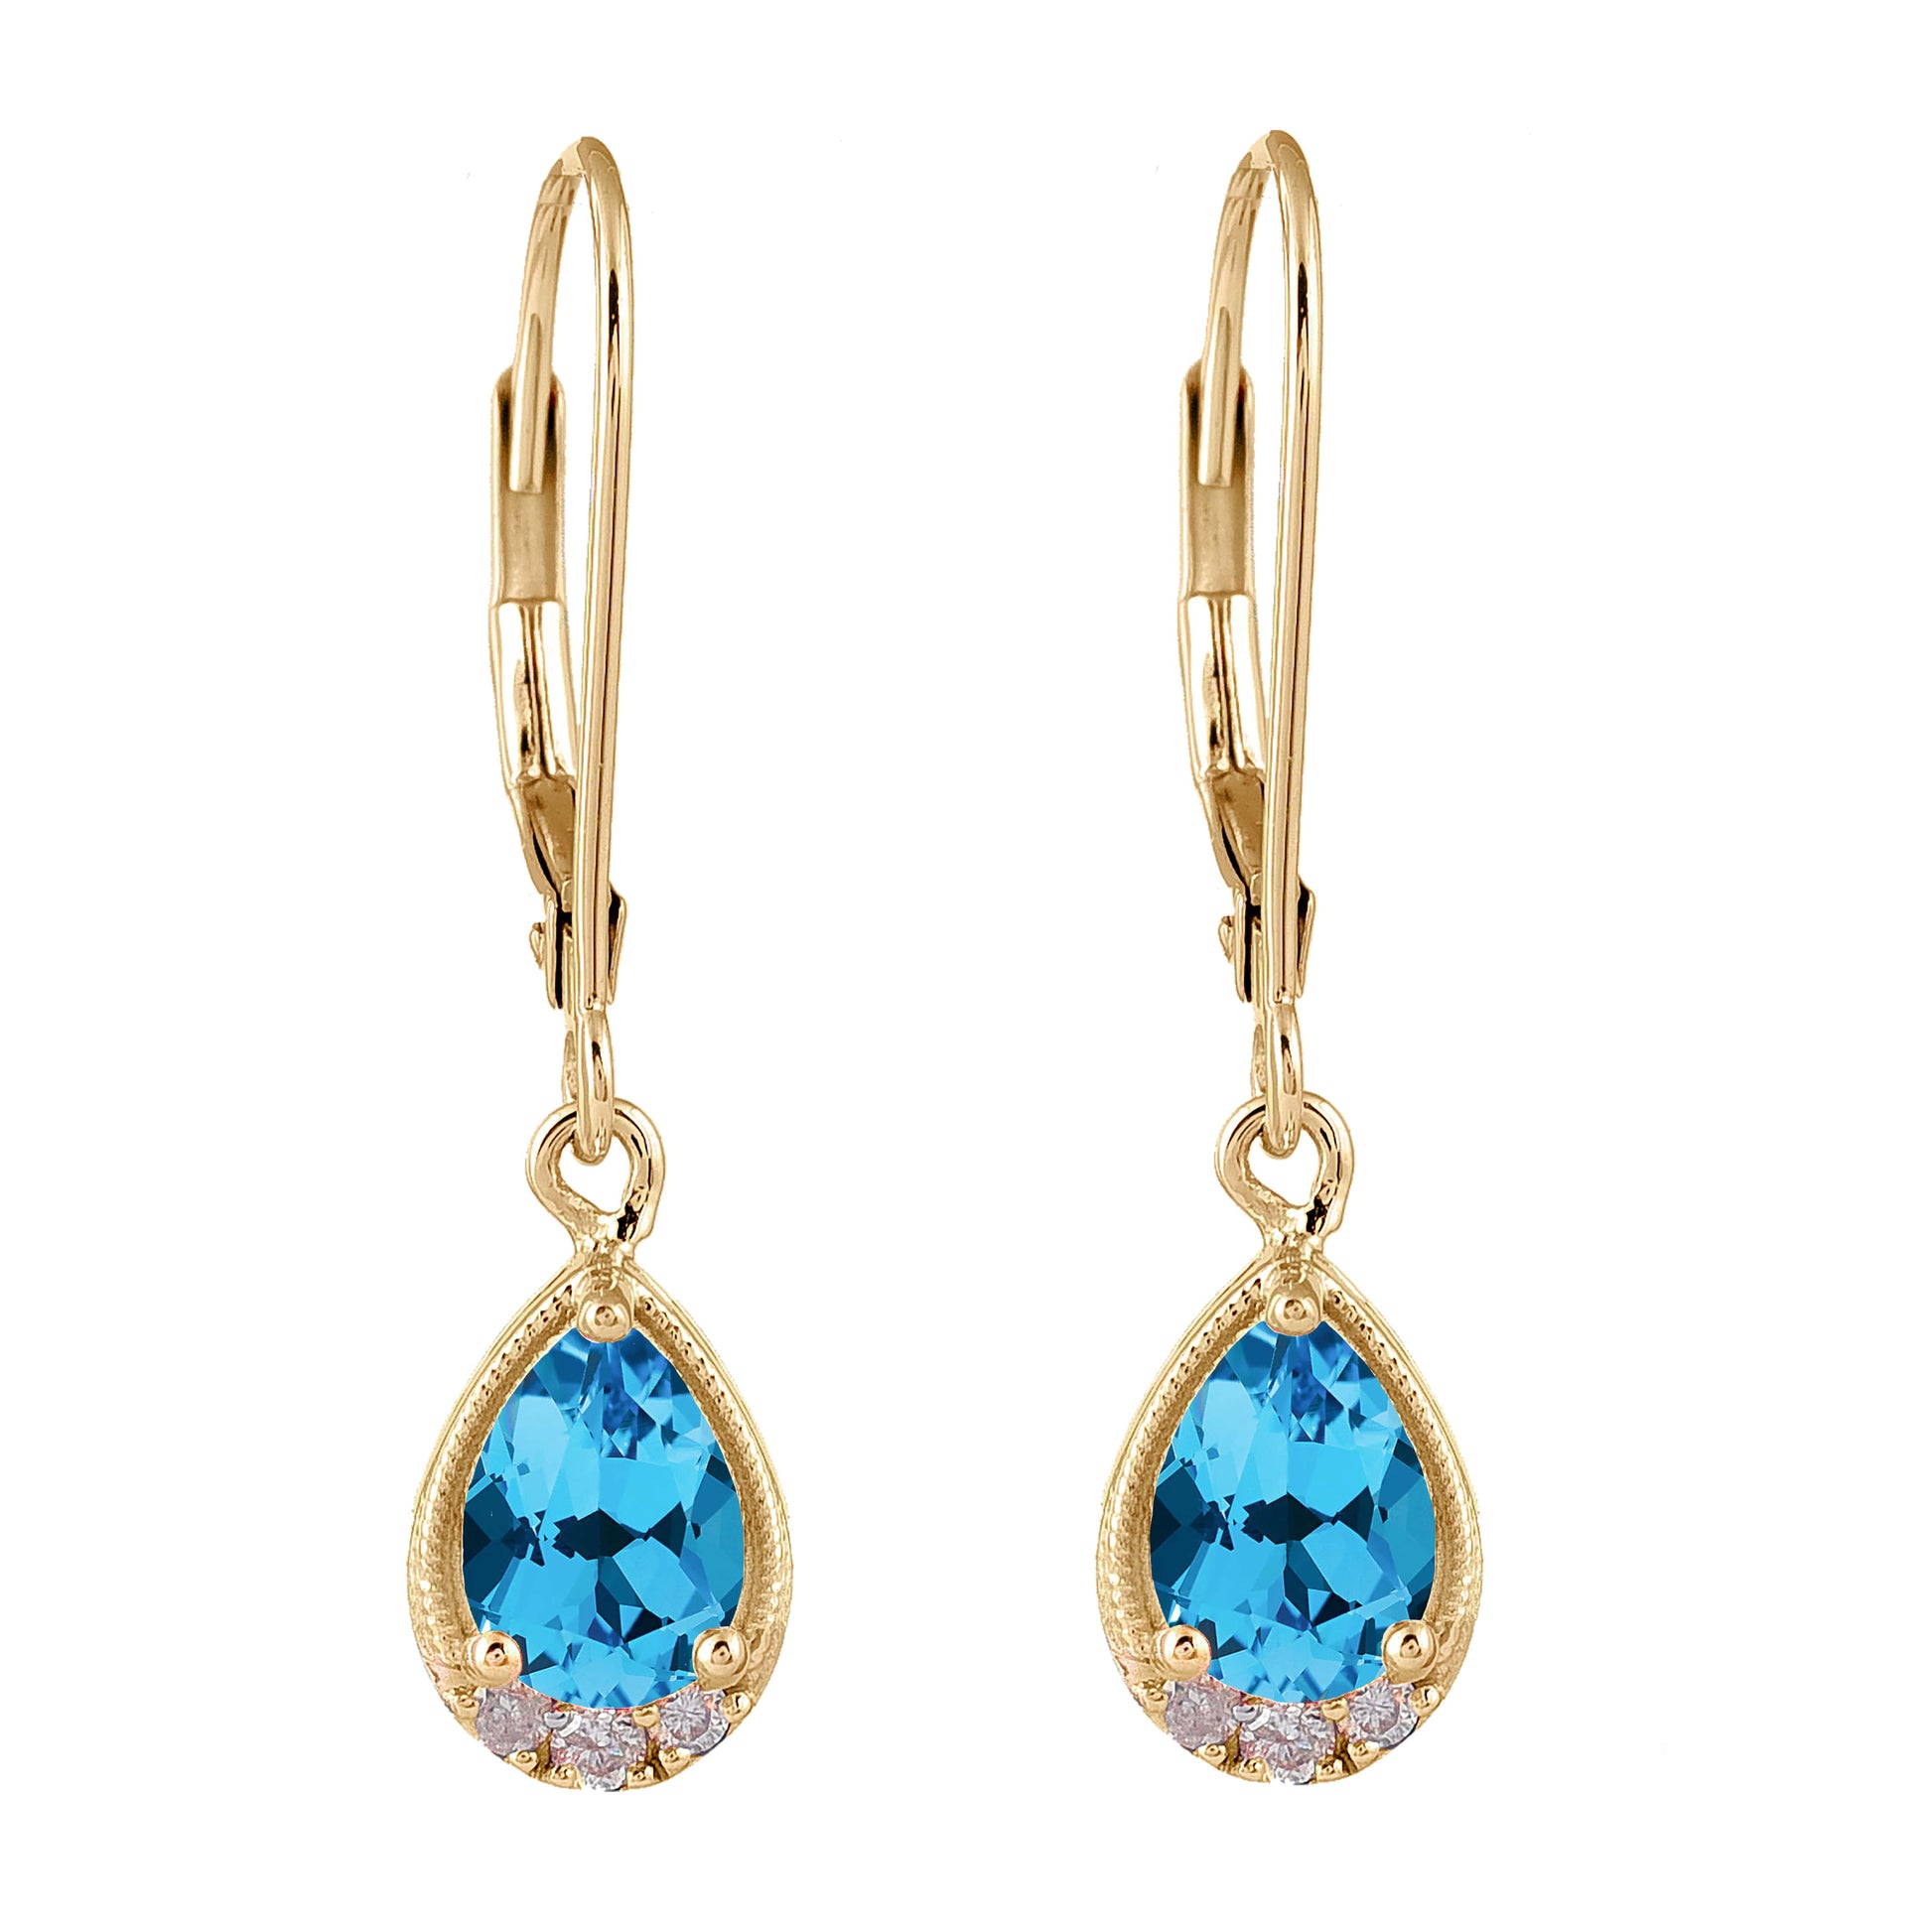 Tear-shaped earrings featuring topaz and diamond